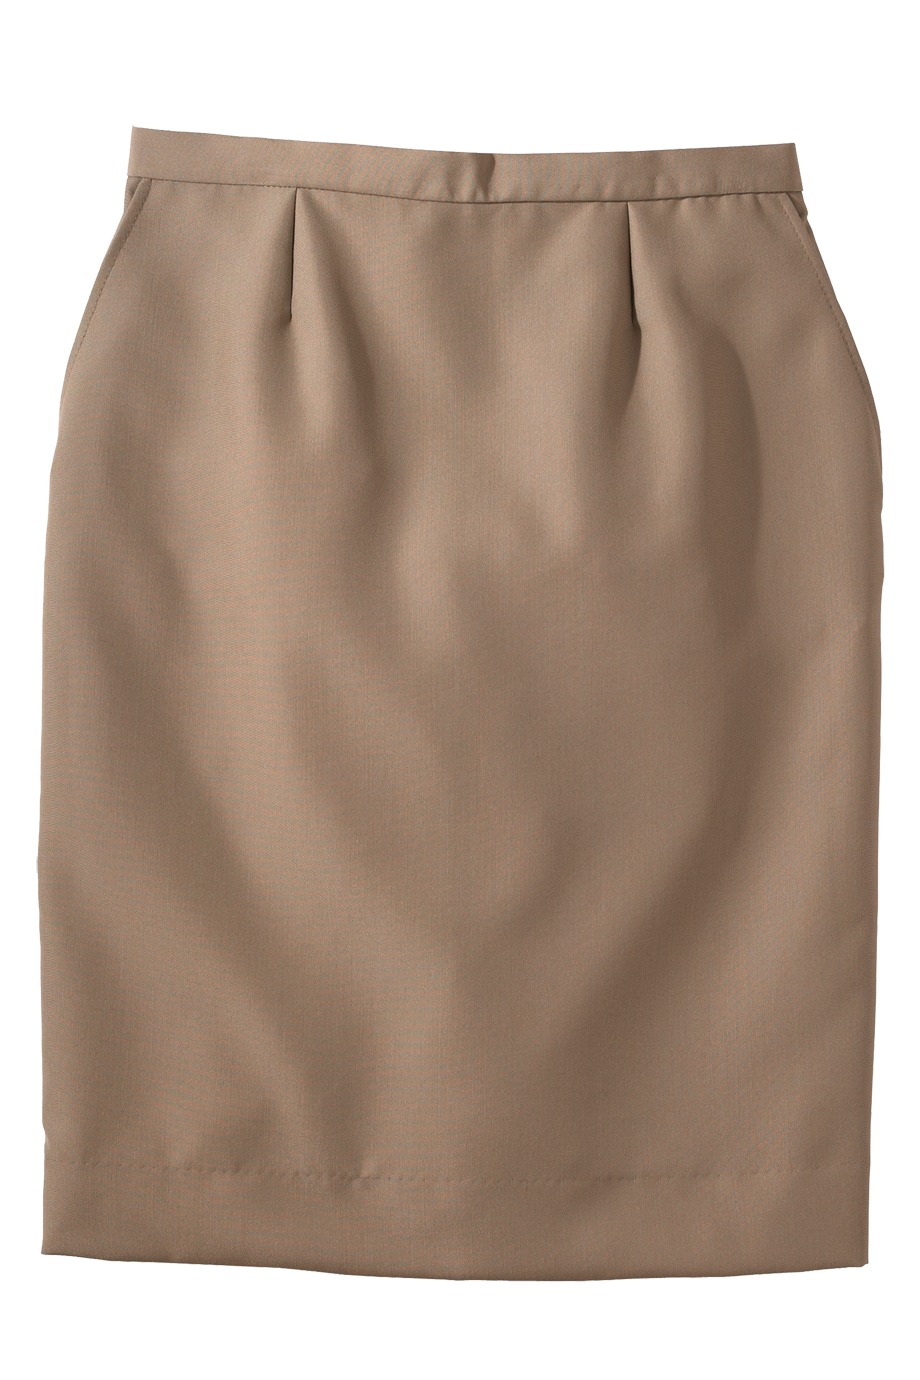 Edwards Garment 9721 - Women's Wshable Wool Blend Skirt